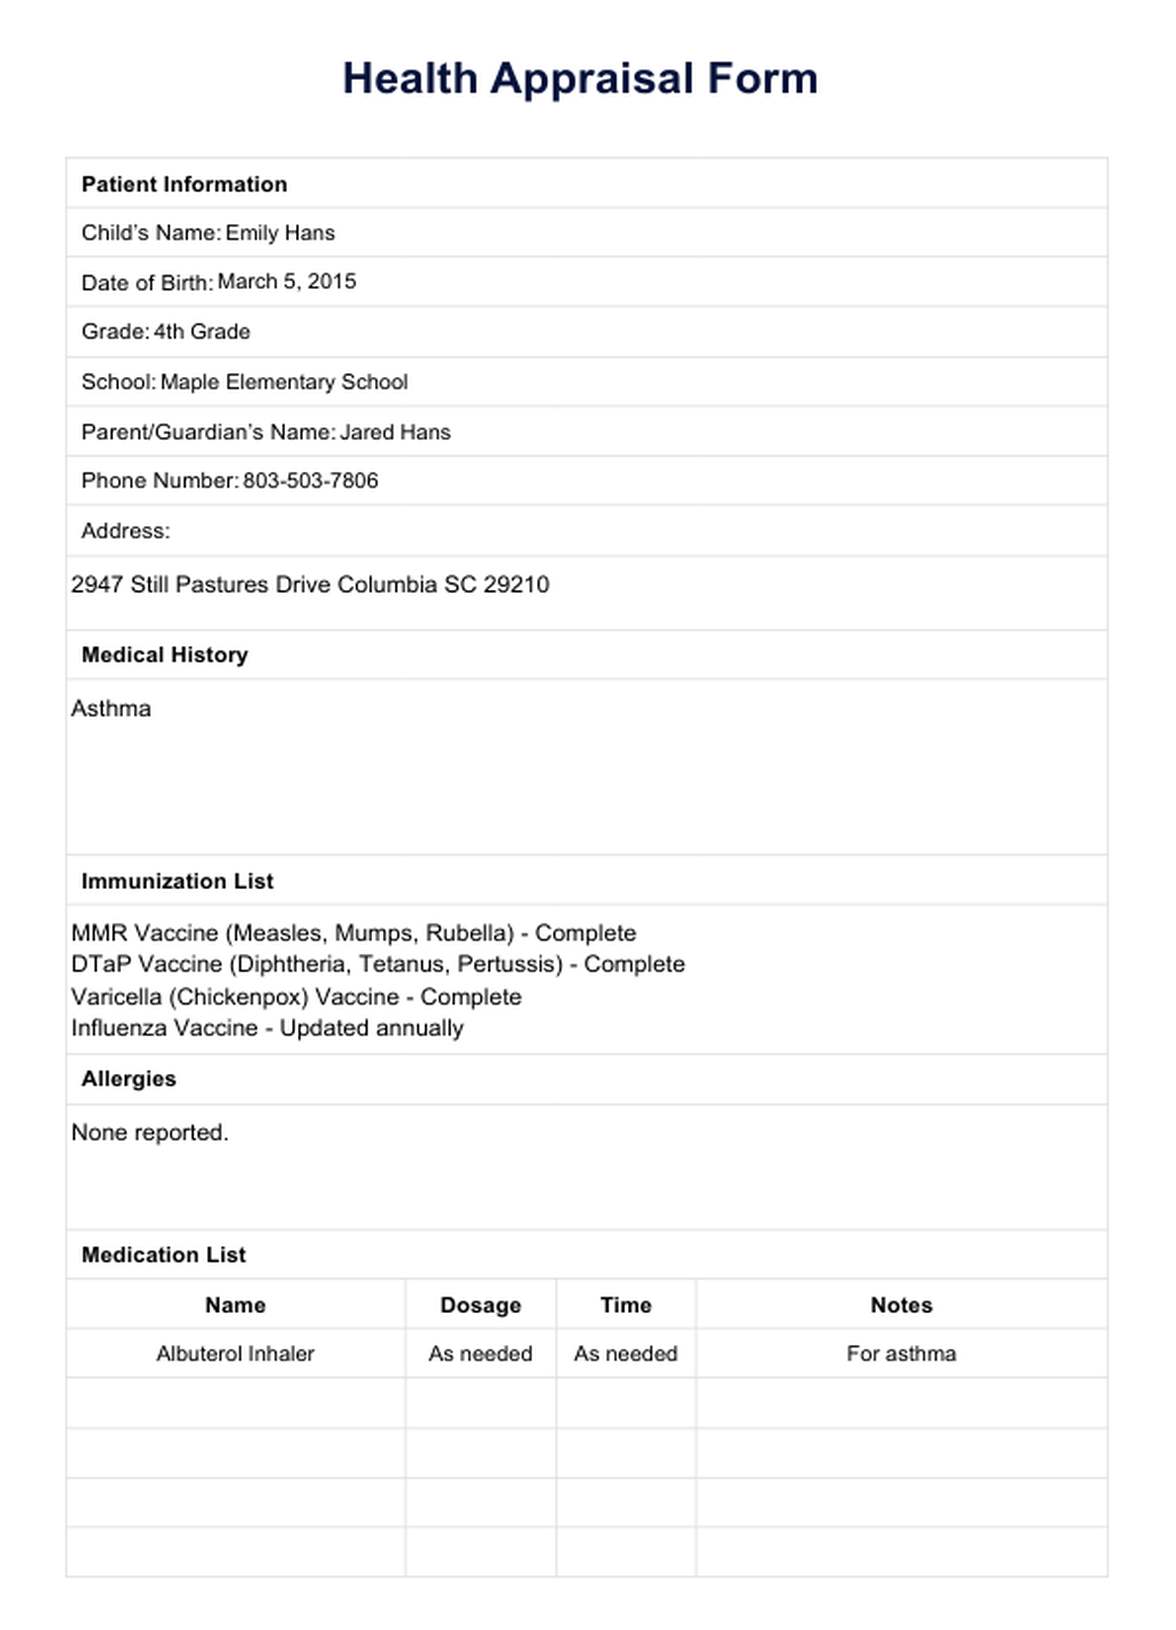 Health Appraisal Form PDF Example